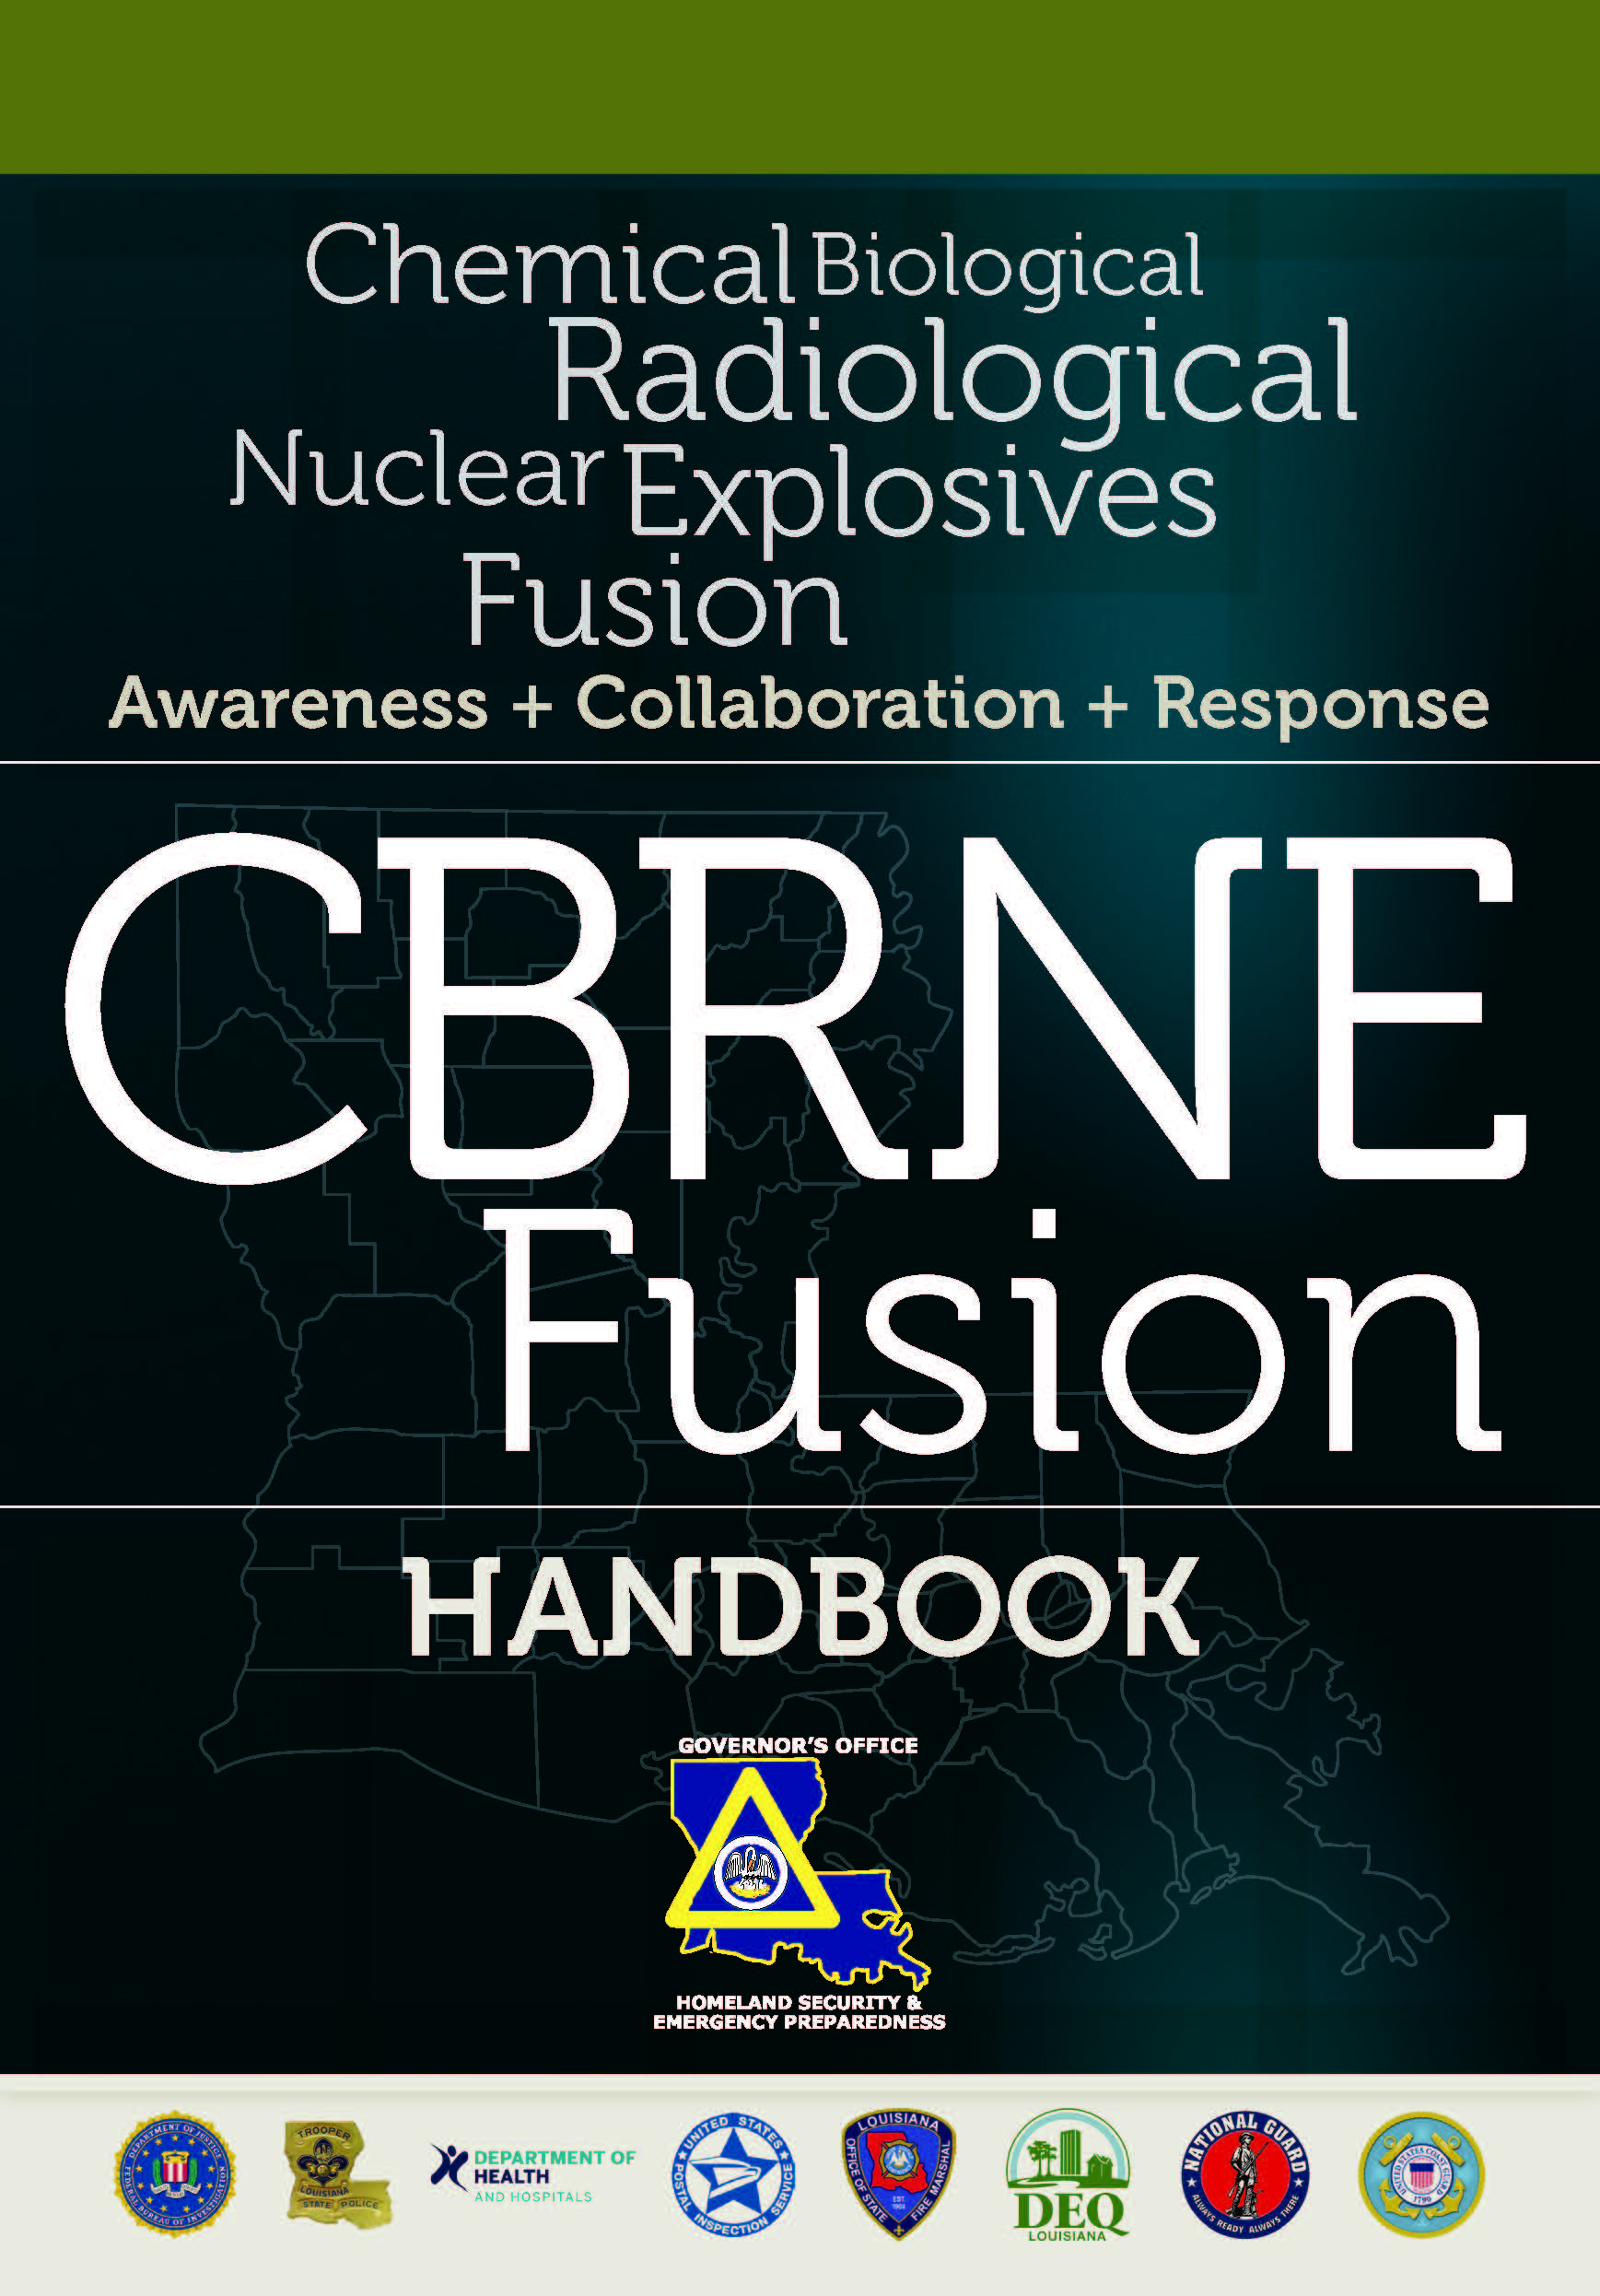 CBRNE Fusion Handbook